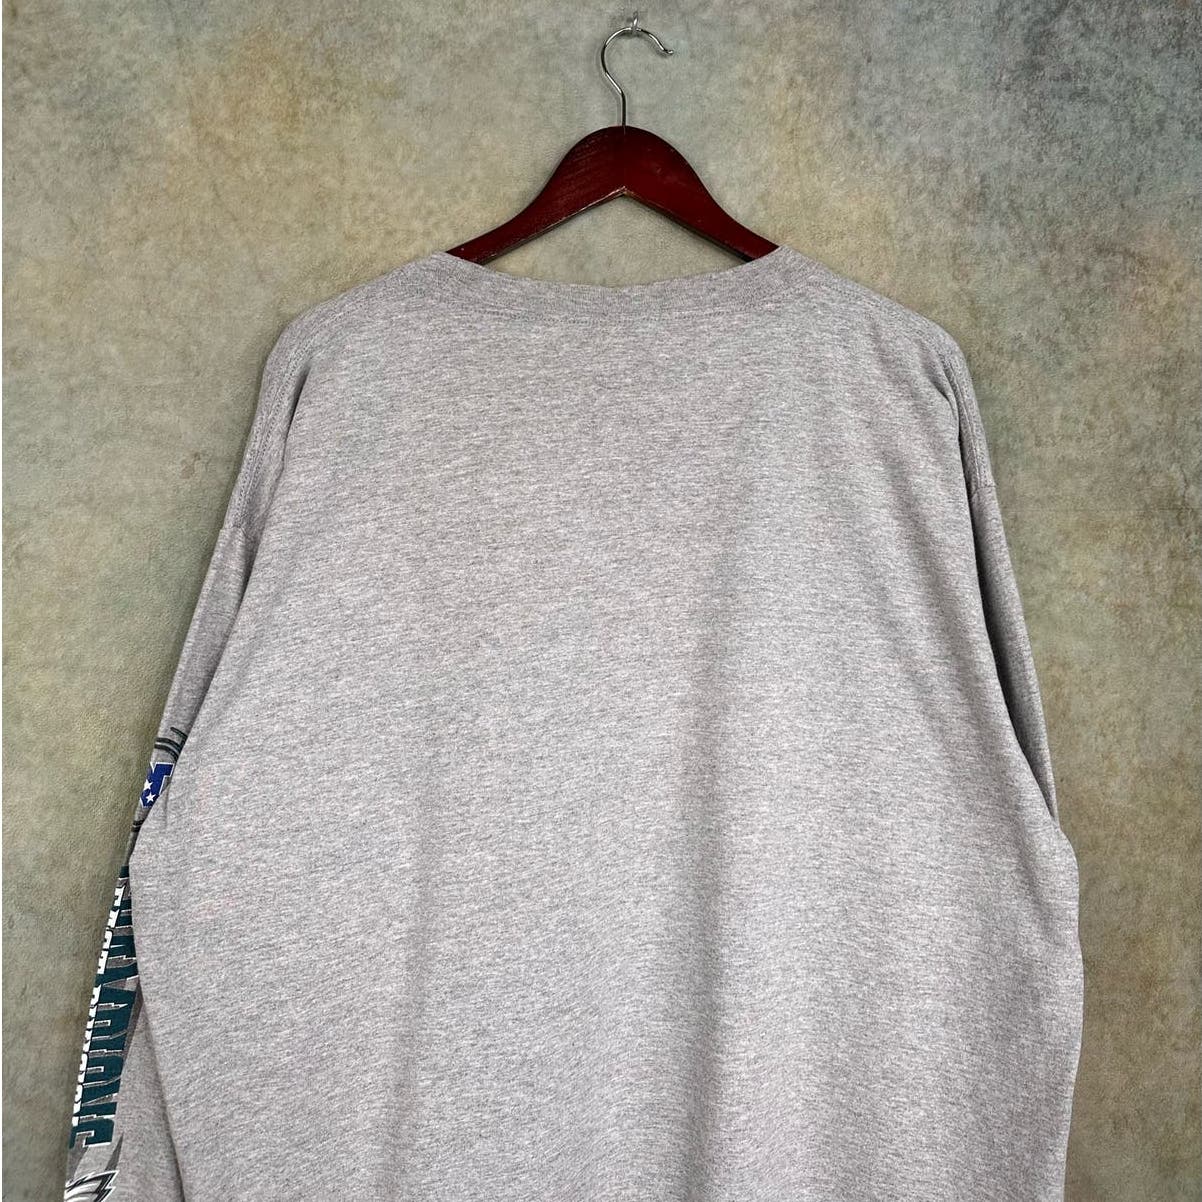 Vintage Philadelphia Eagles Super Bowl Champs Long Sleeve Shirt XL